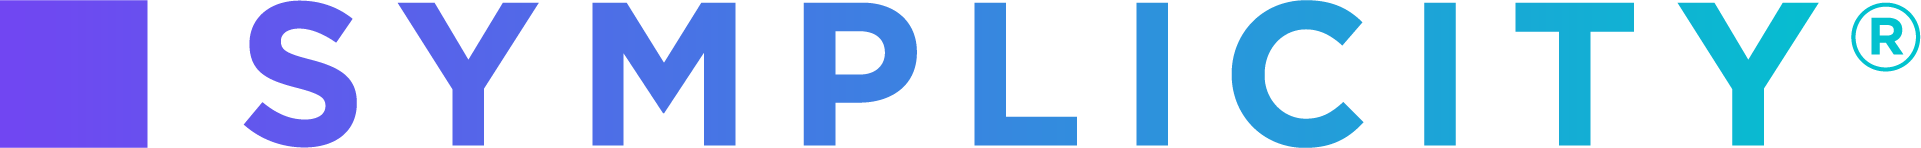 logo_digital_symplicity_reg_gradient